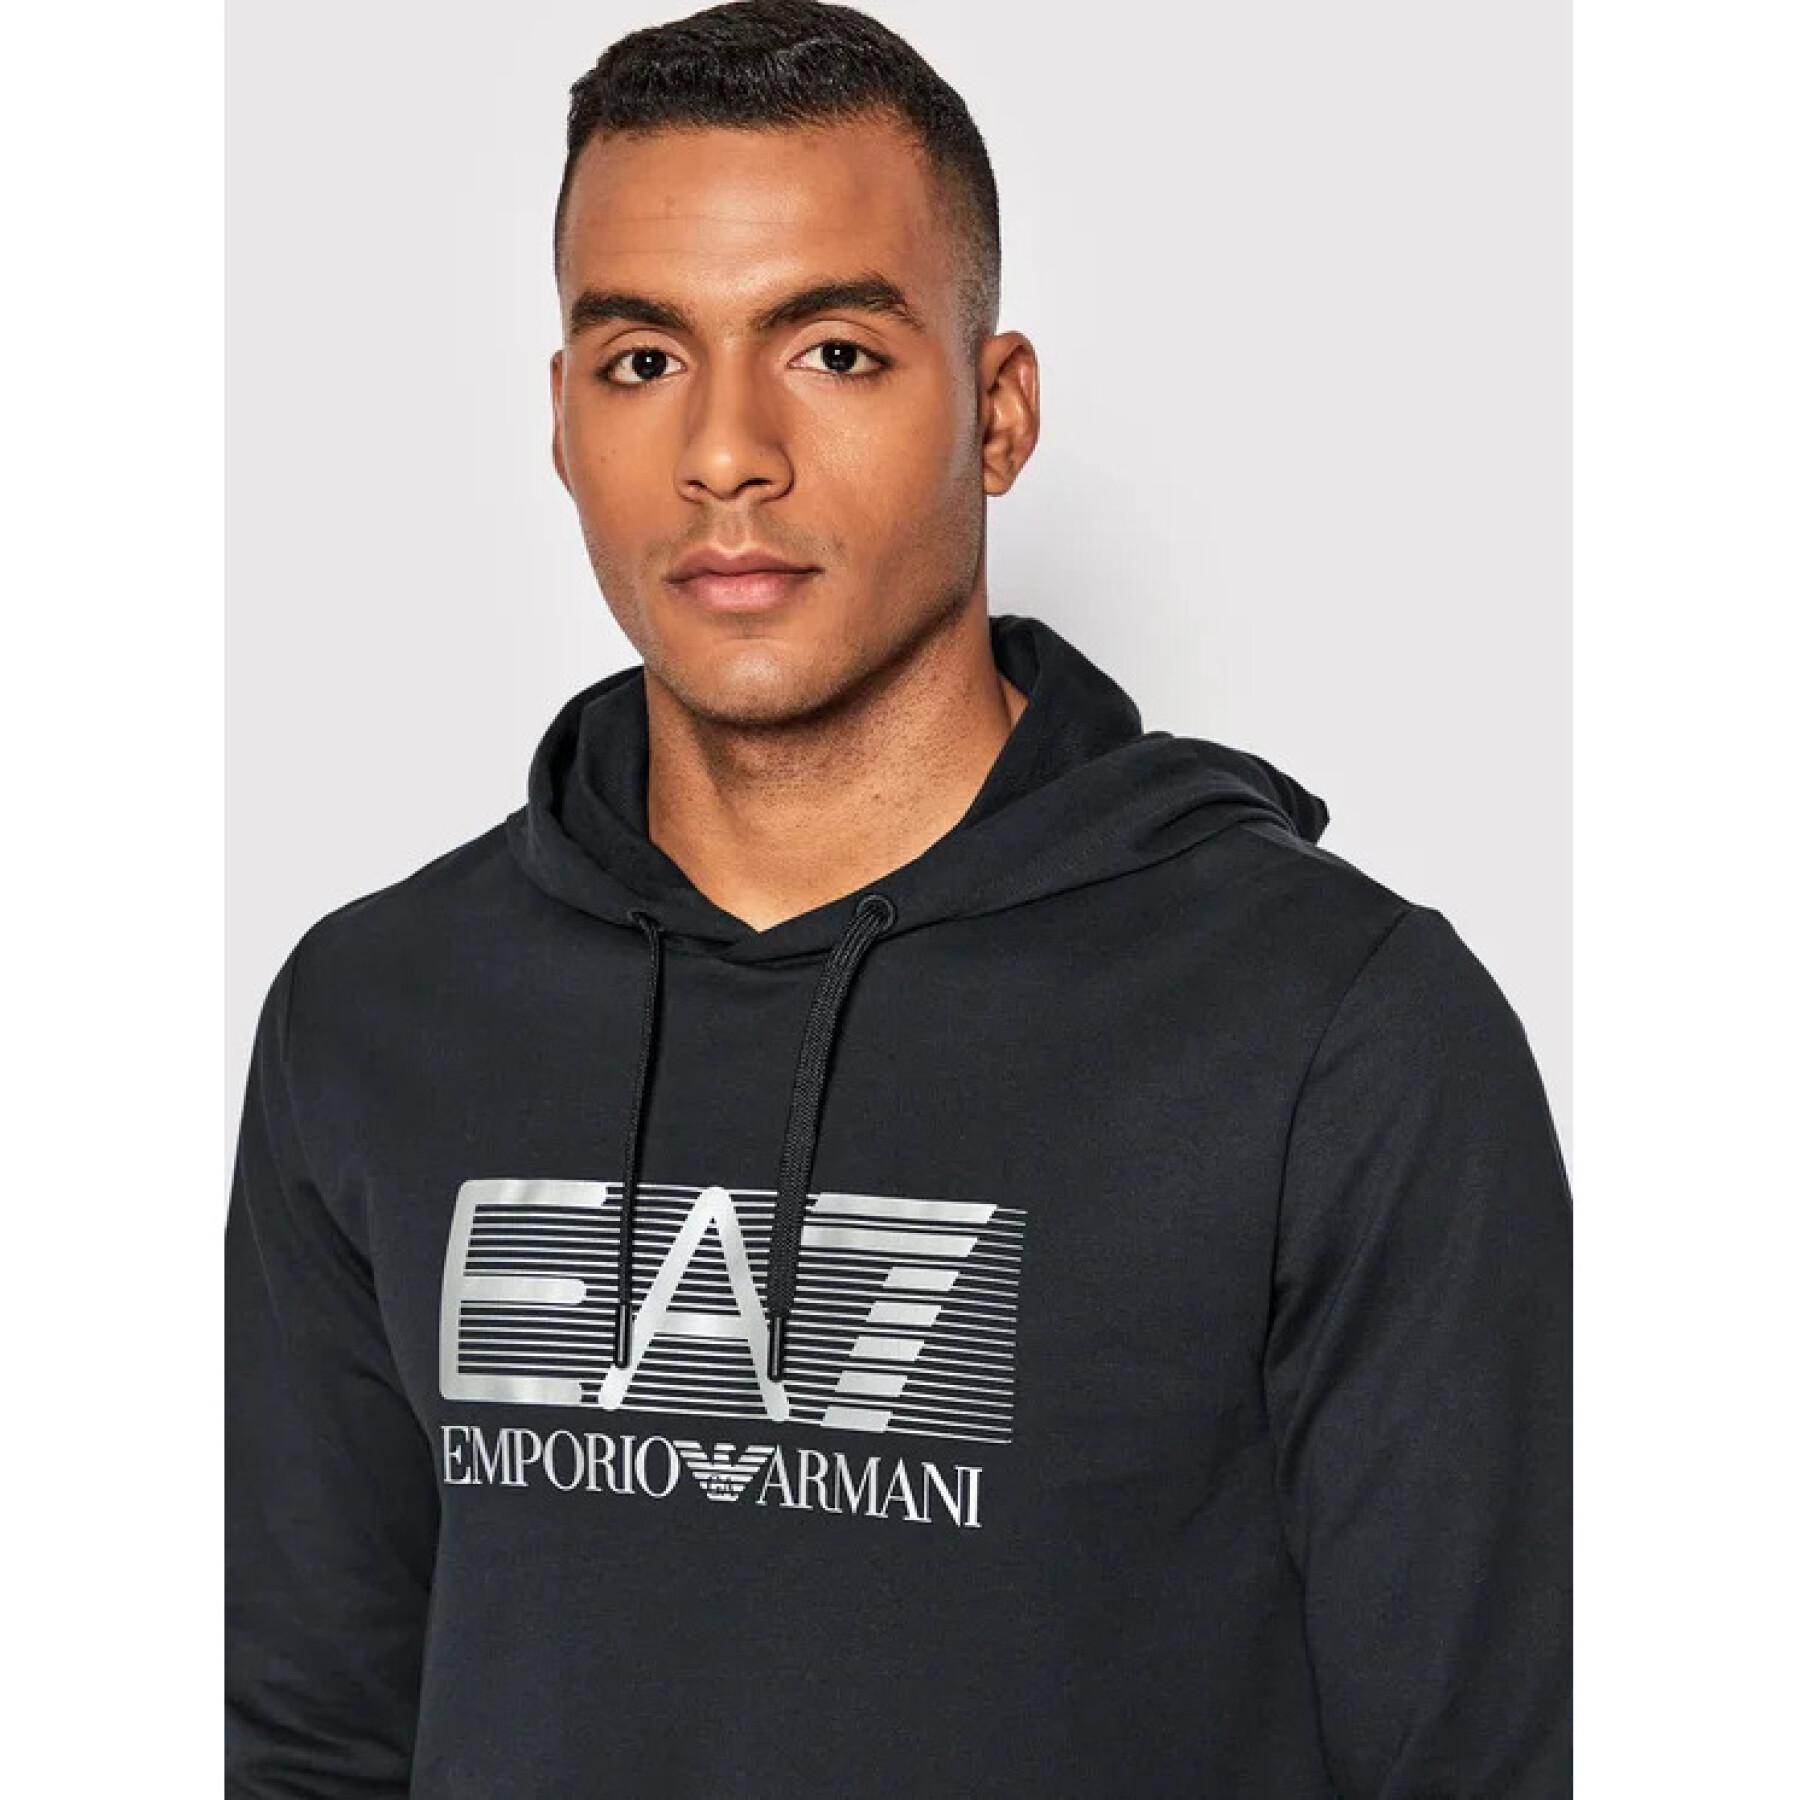 Hooded sweatshirt EA7 Emporio Armani